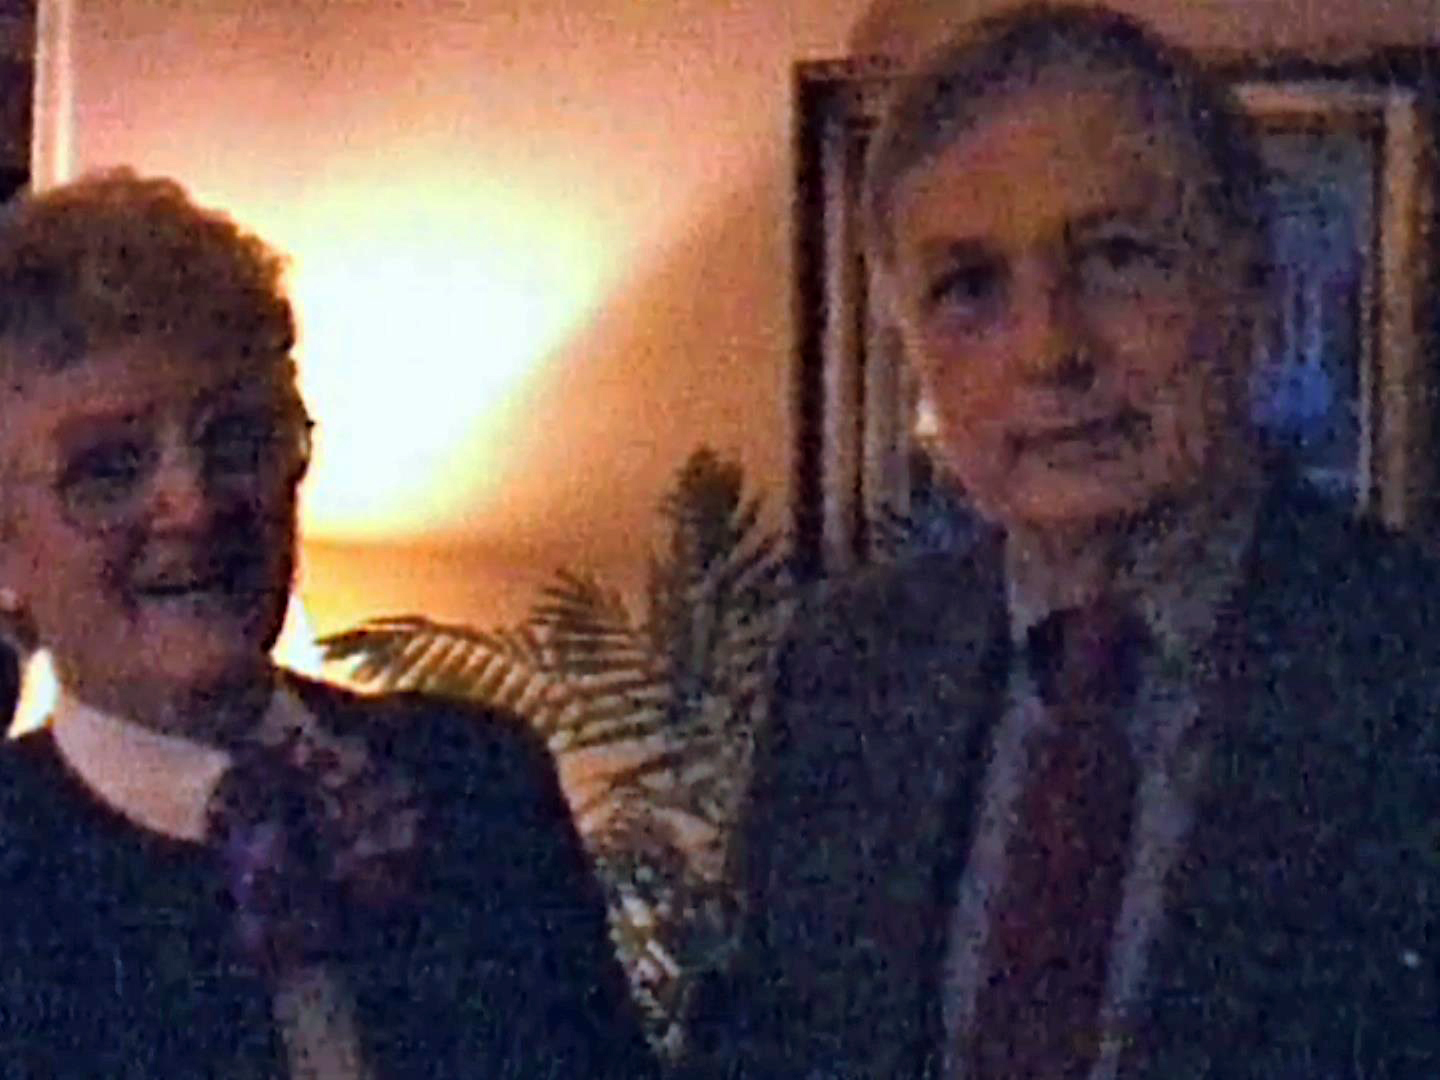 Susan Lynch and Walter Heffron